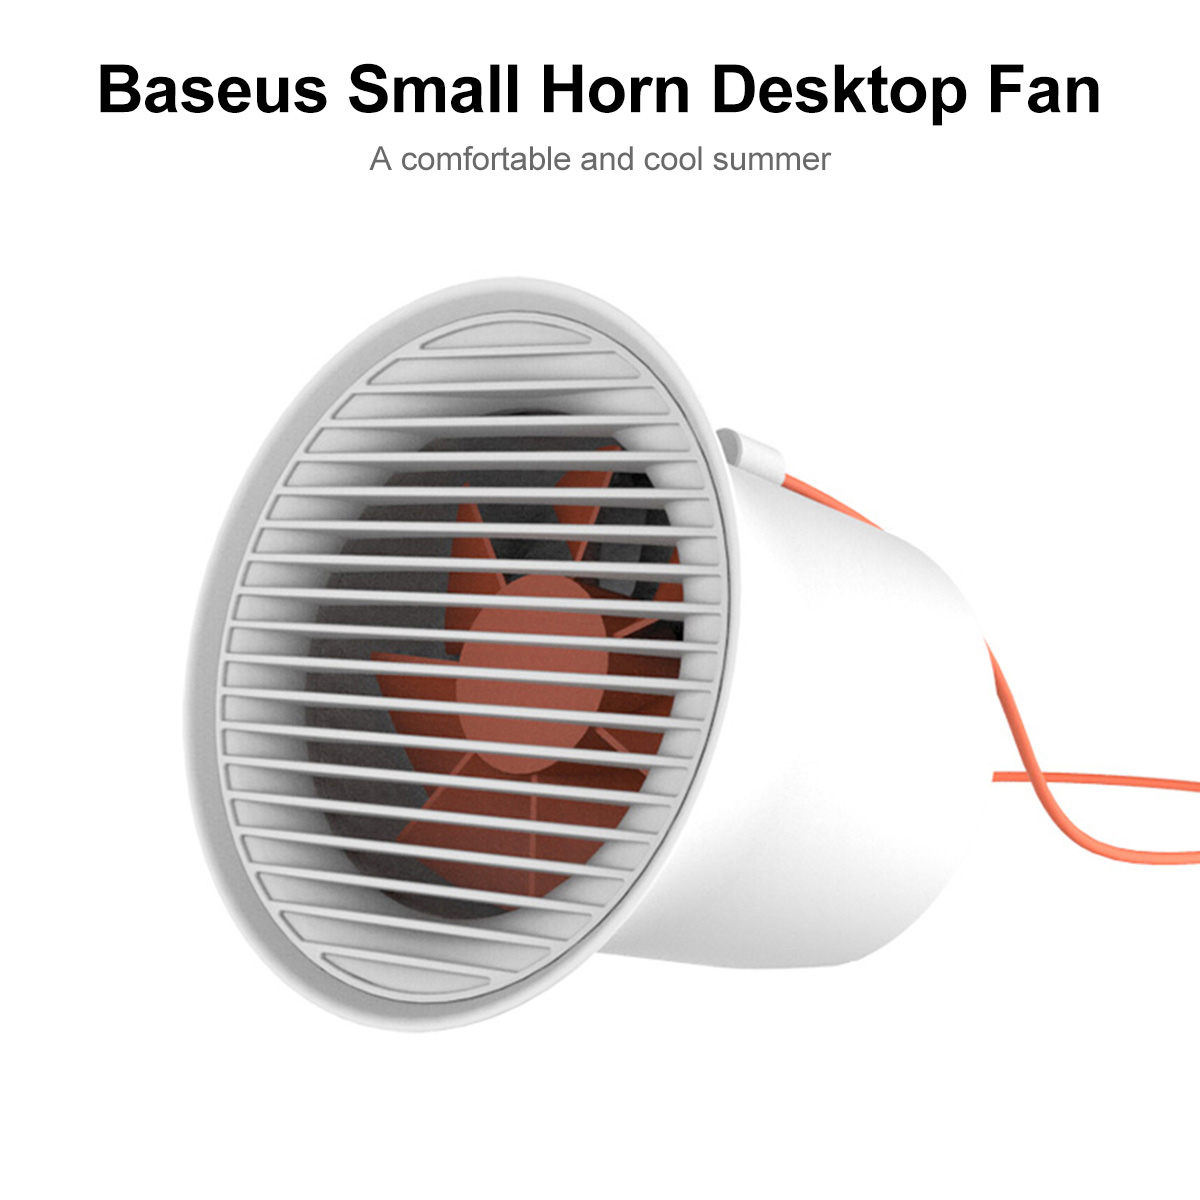 Baseus Small Horn Desktop Fan Alis Stores